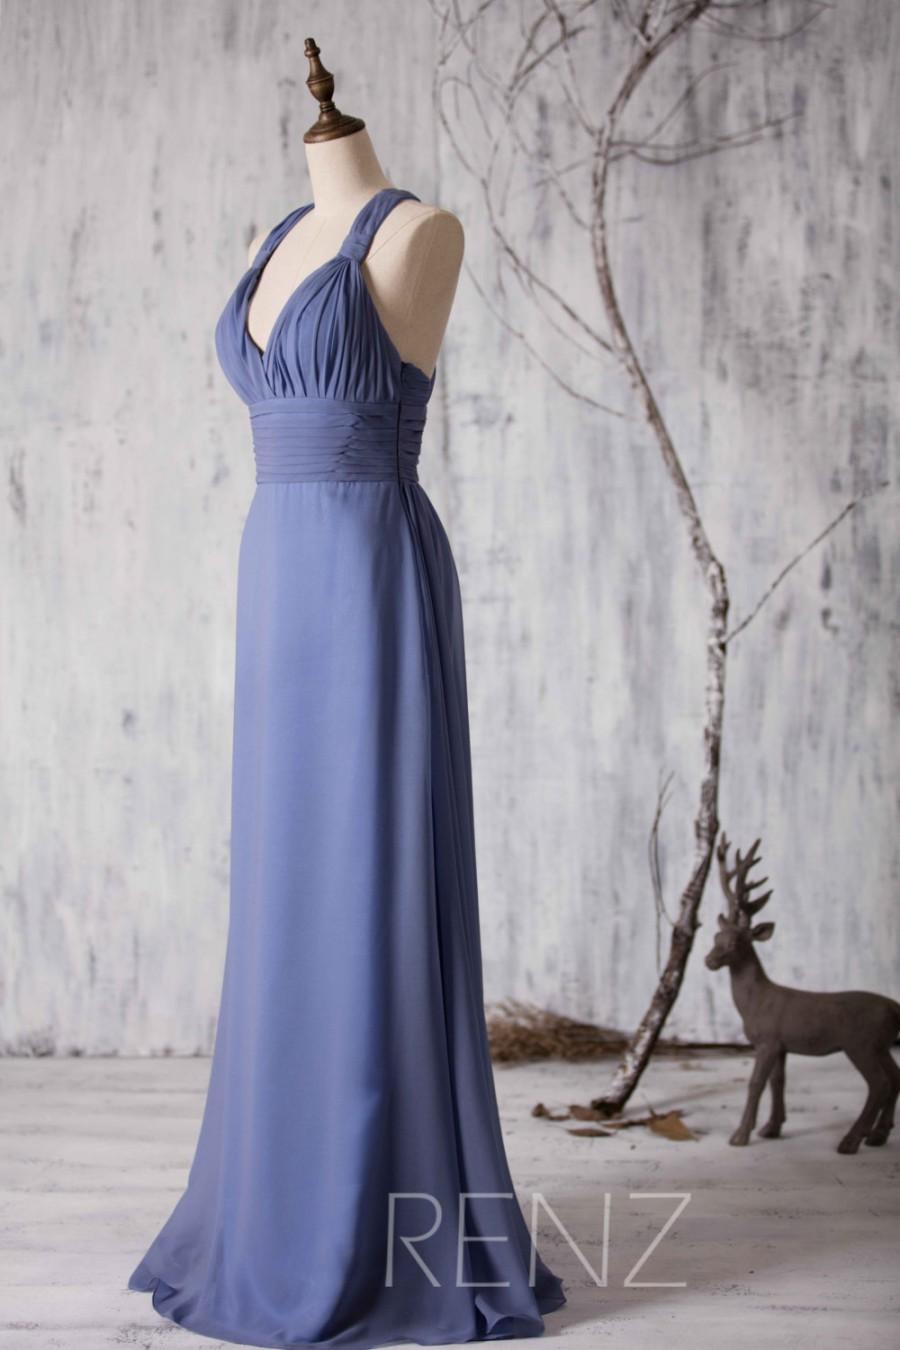 زفاف - 2015 Steel Blue Bridesmaid dress Chiffon, Halter Strape Wedding dress, Long Maxi dress, V neck Formal dress, Party dress floor length (F079)